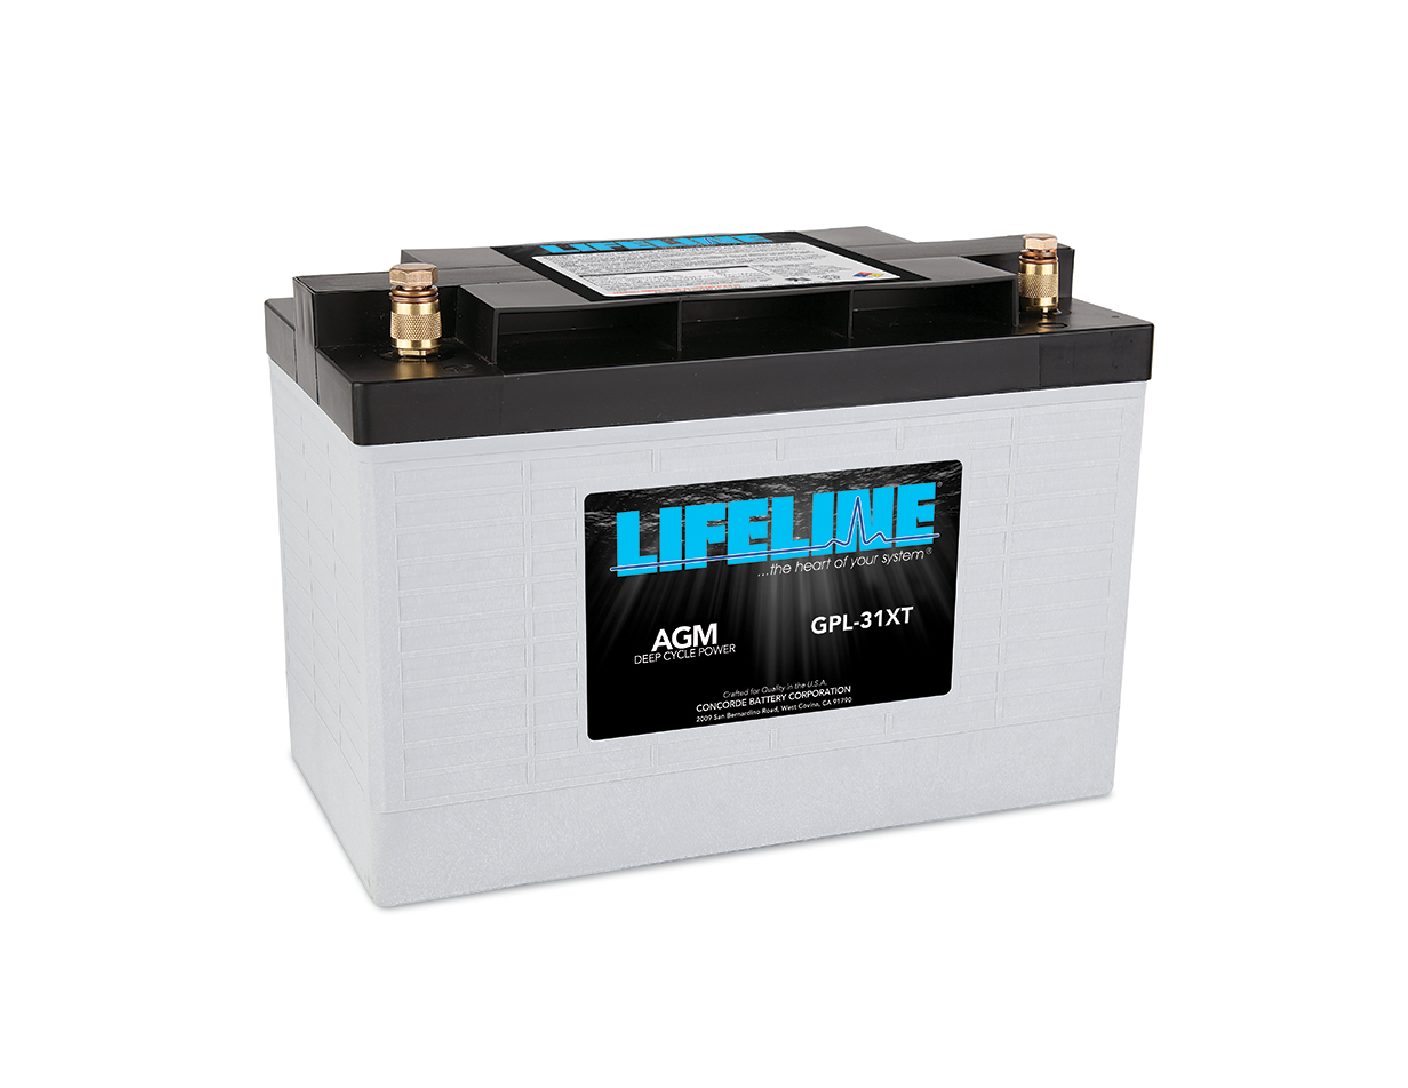 Lifeline GPL-31XT